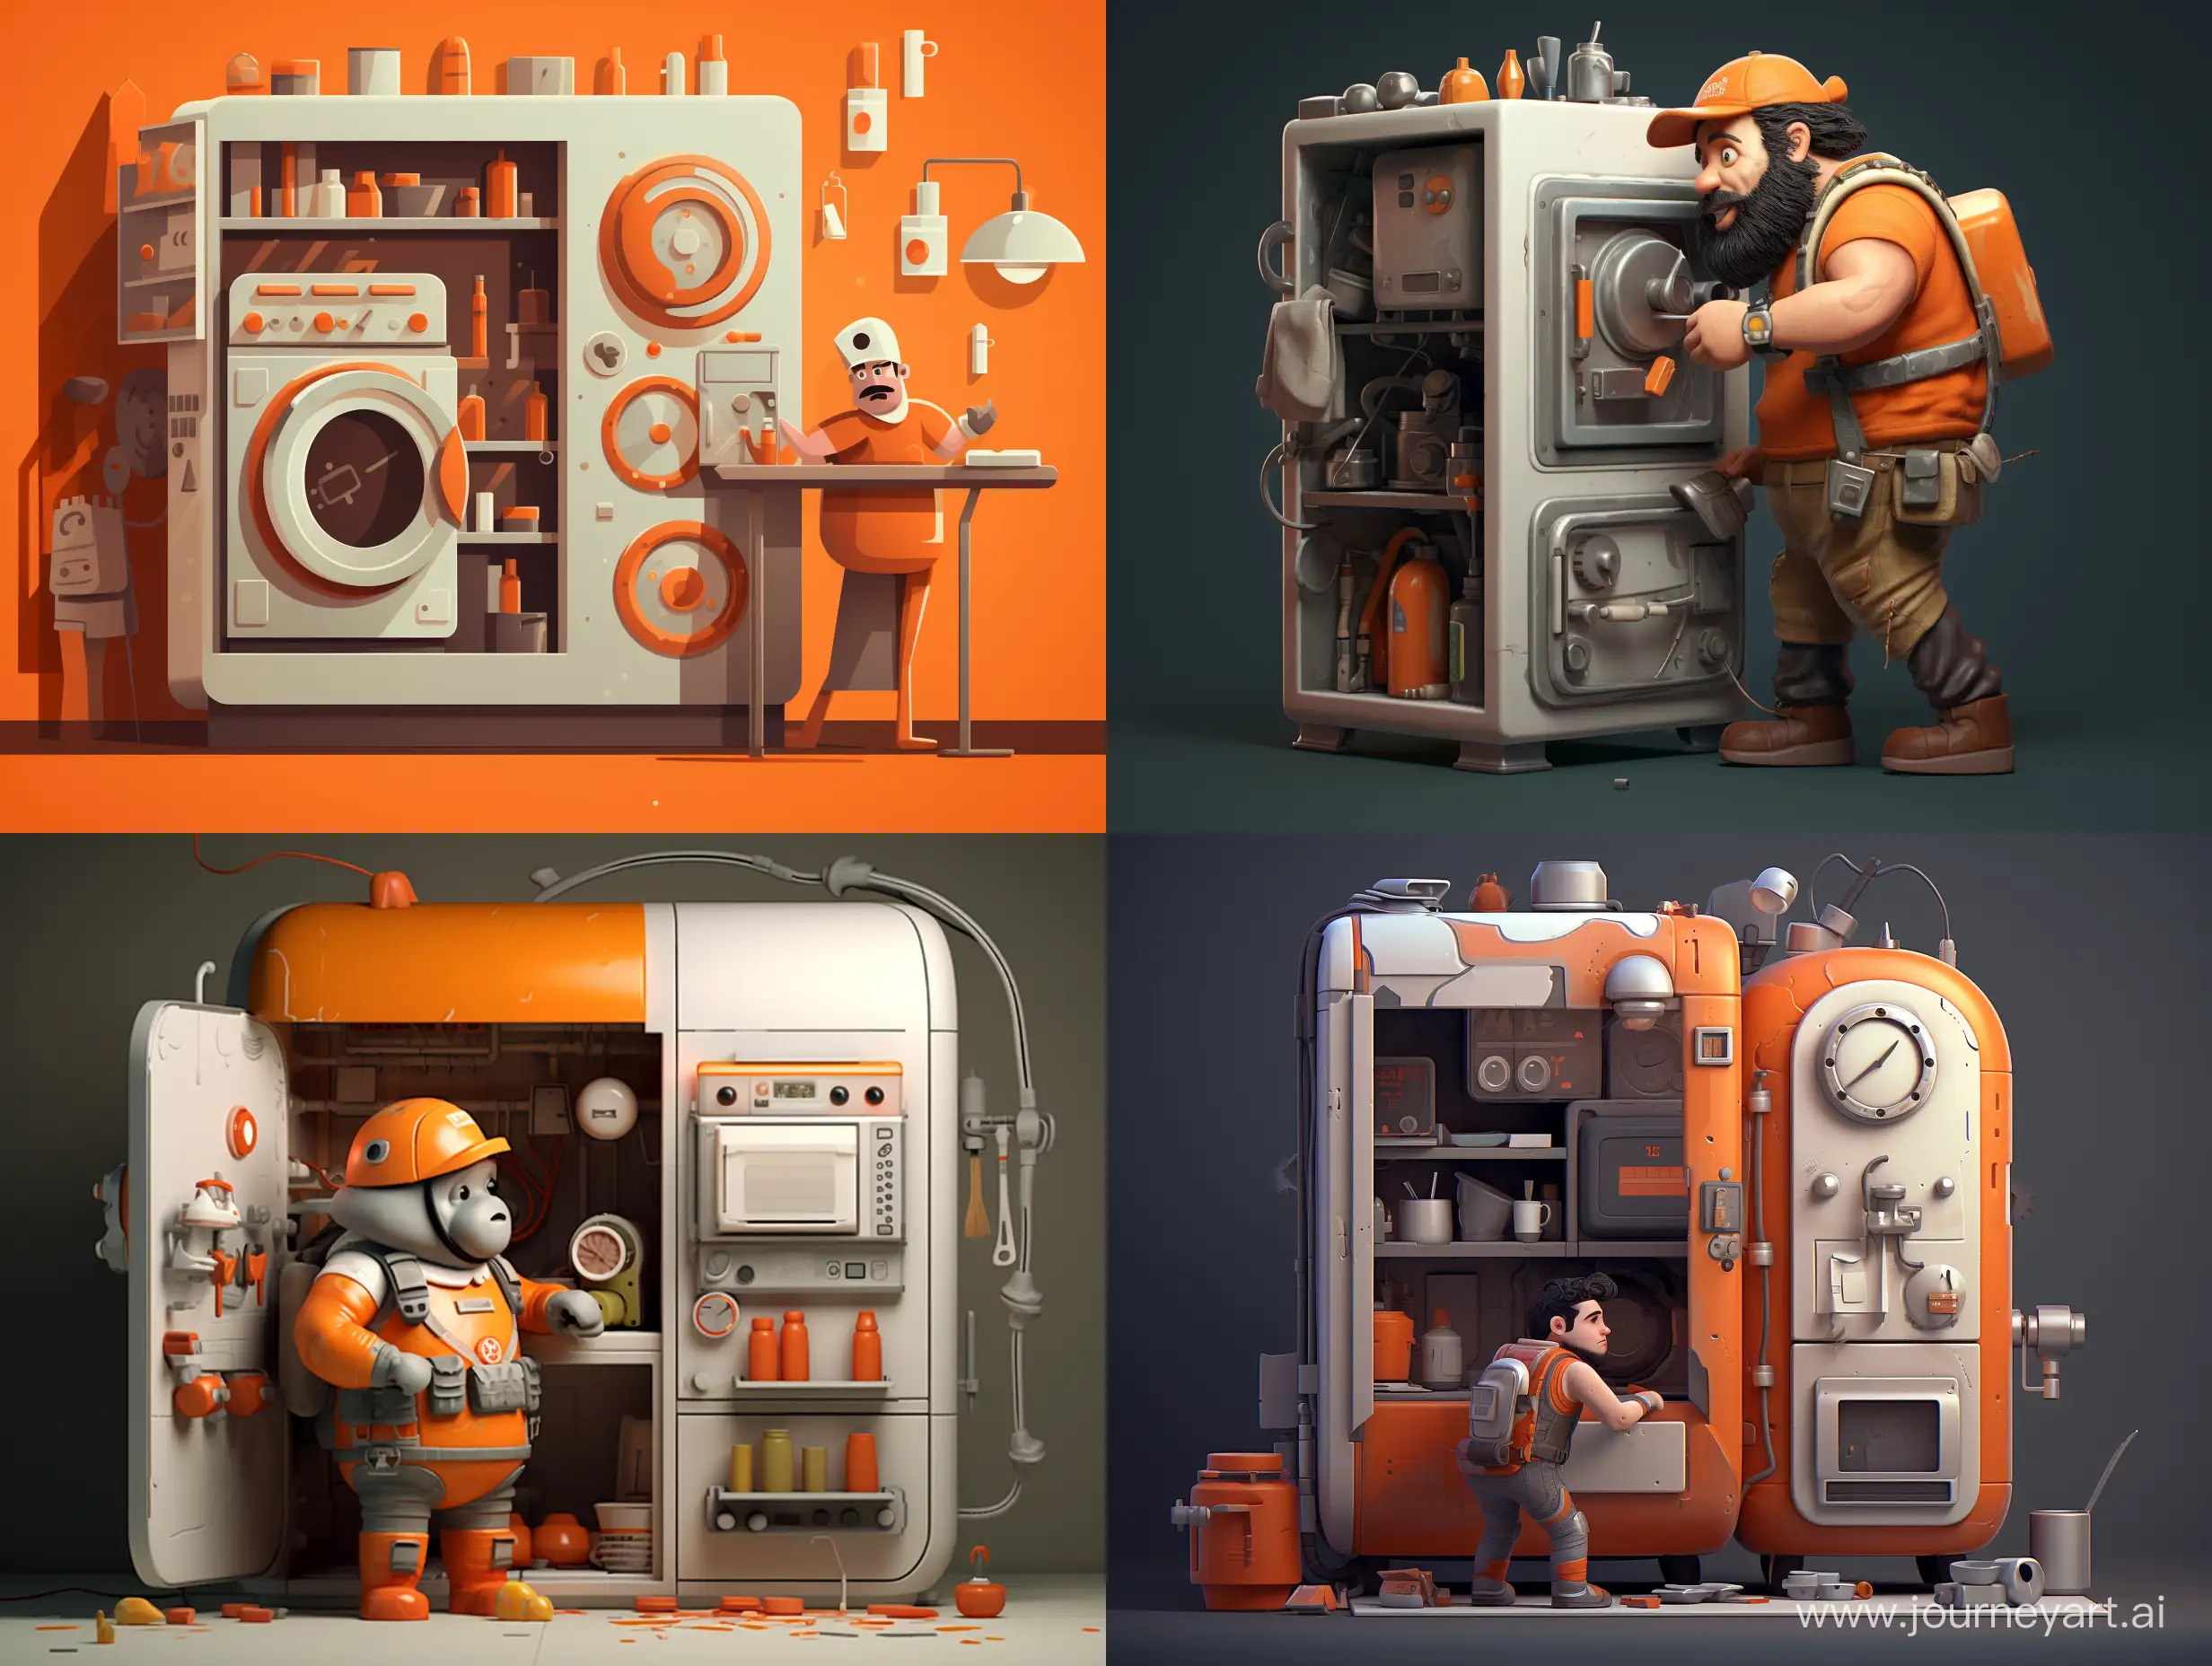 Expert-Refrigerator-Repairman-in-Action-Gray-and-Orange-Attire